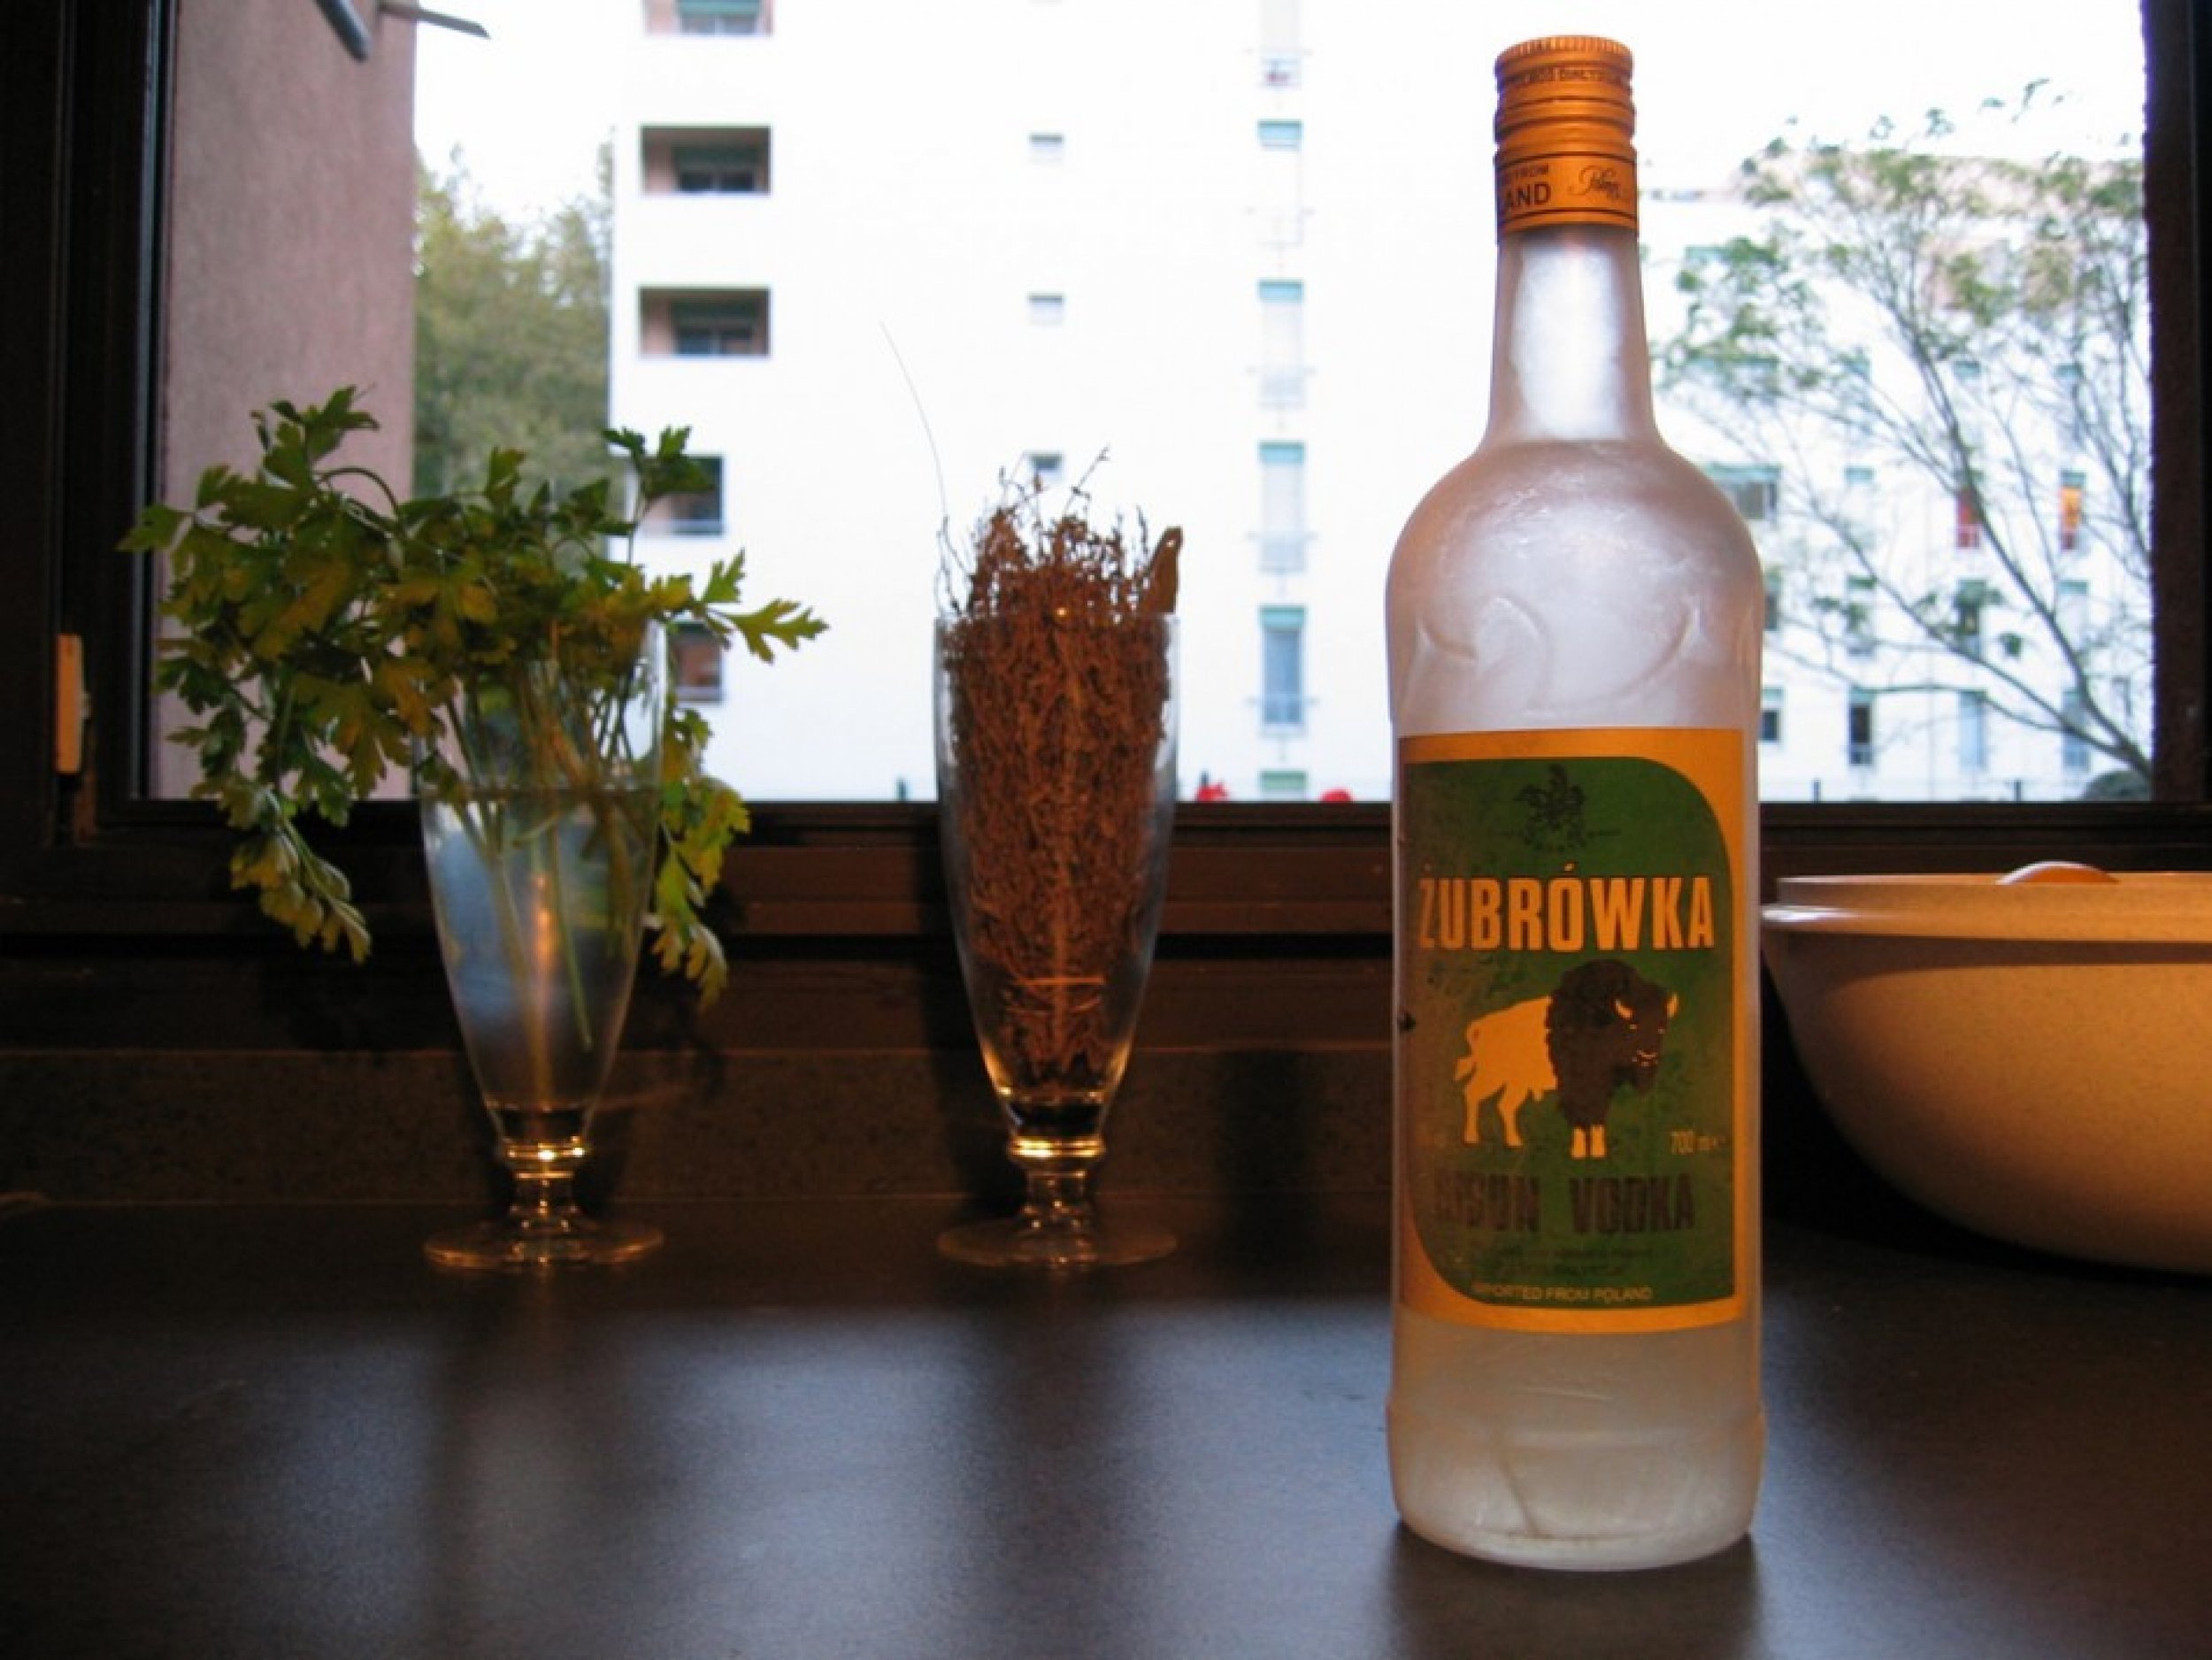 A Bottle of ubrwka